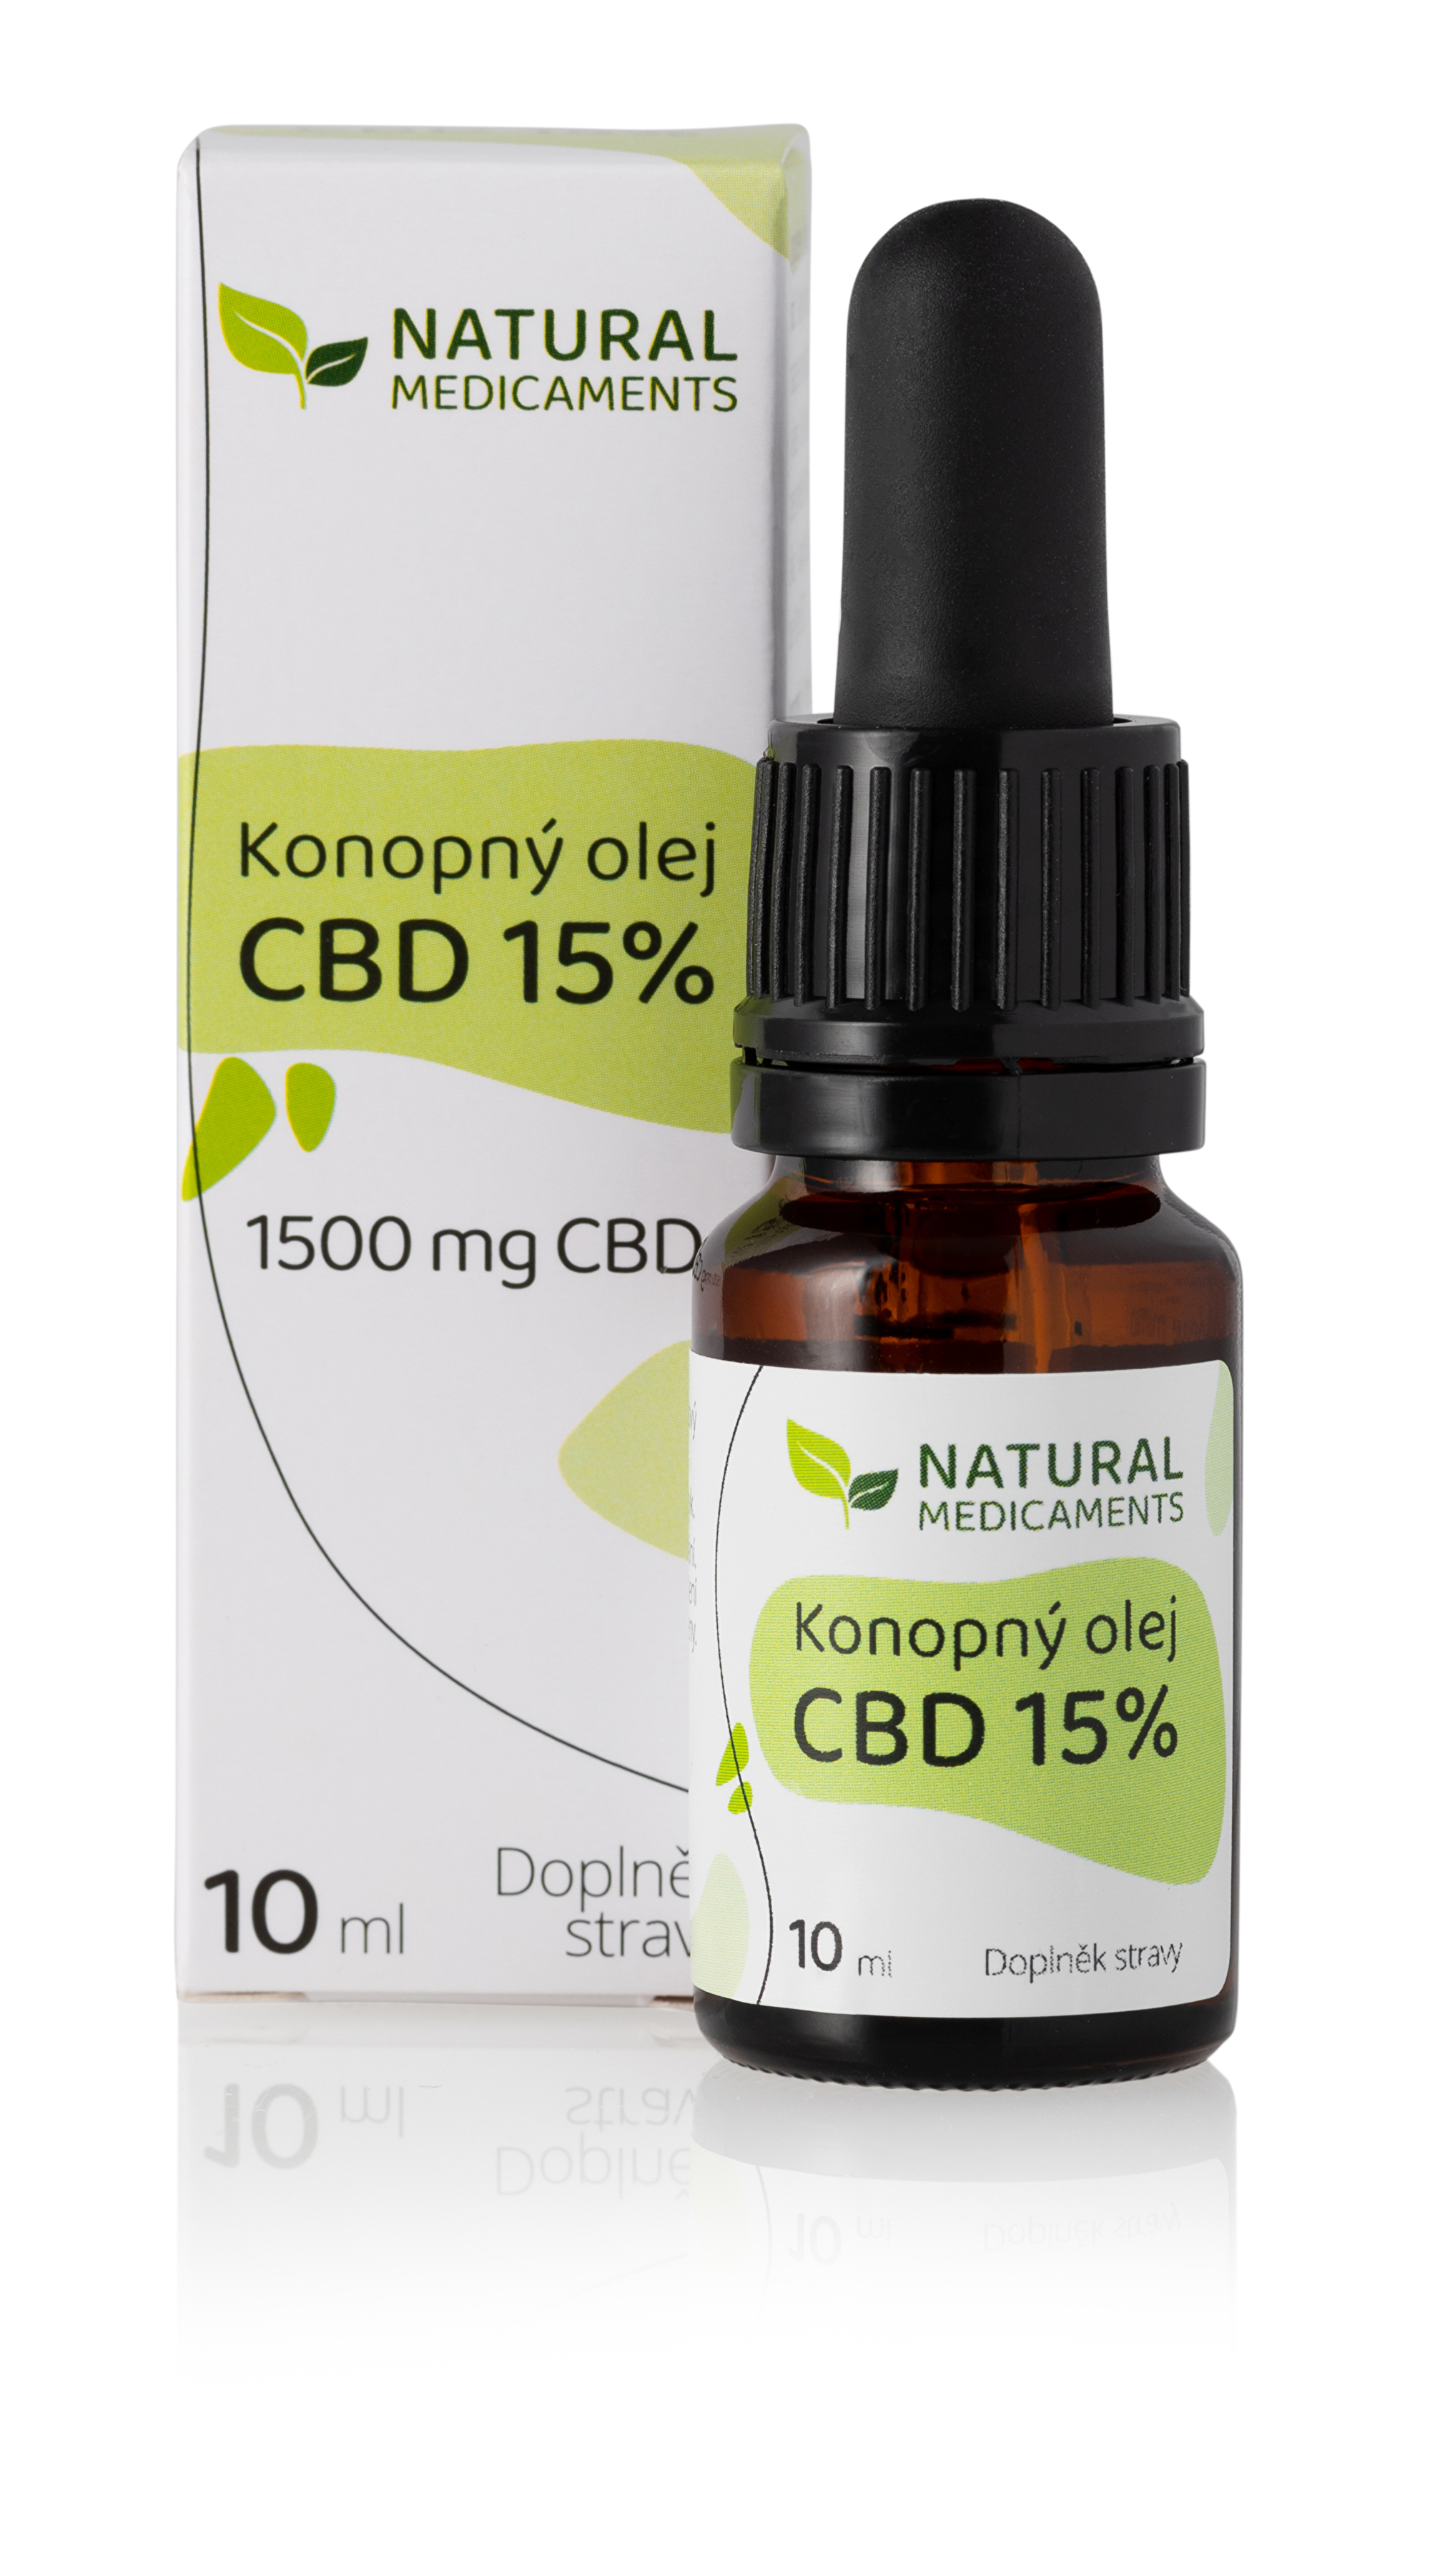 Zobrazit detail výrobku Natural Medicaments Konopný olej CBD 15% 10 ml